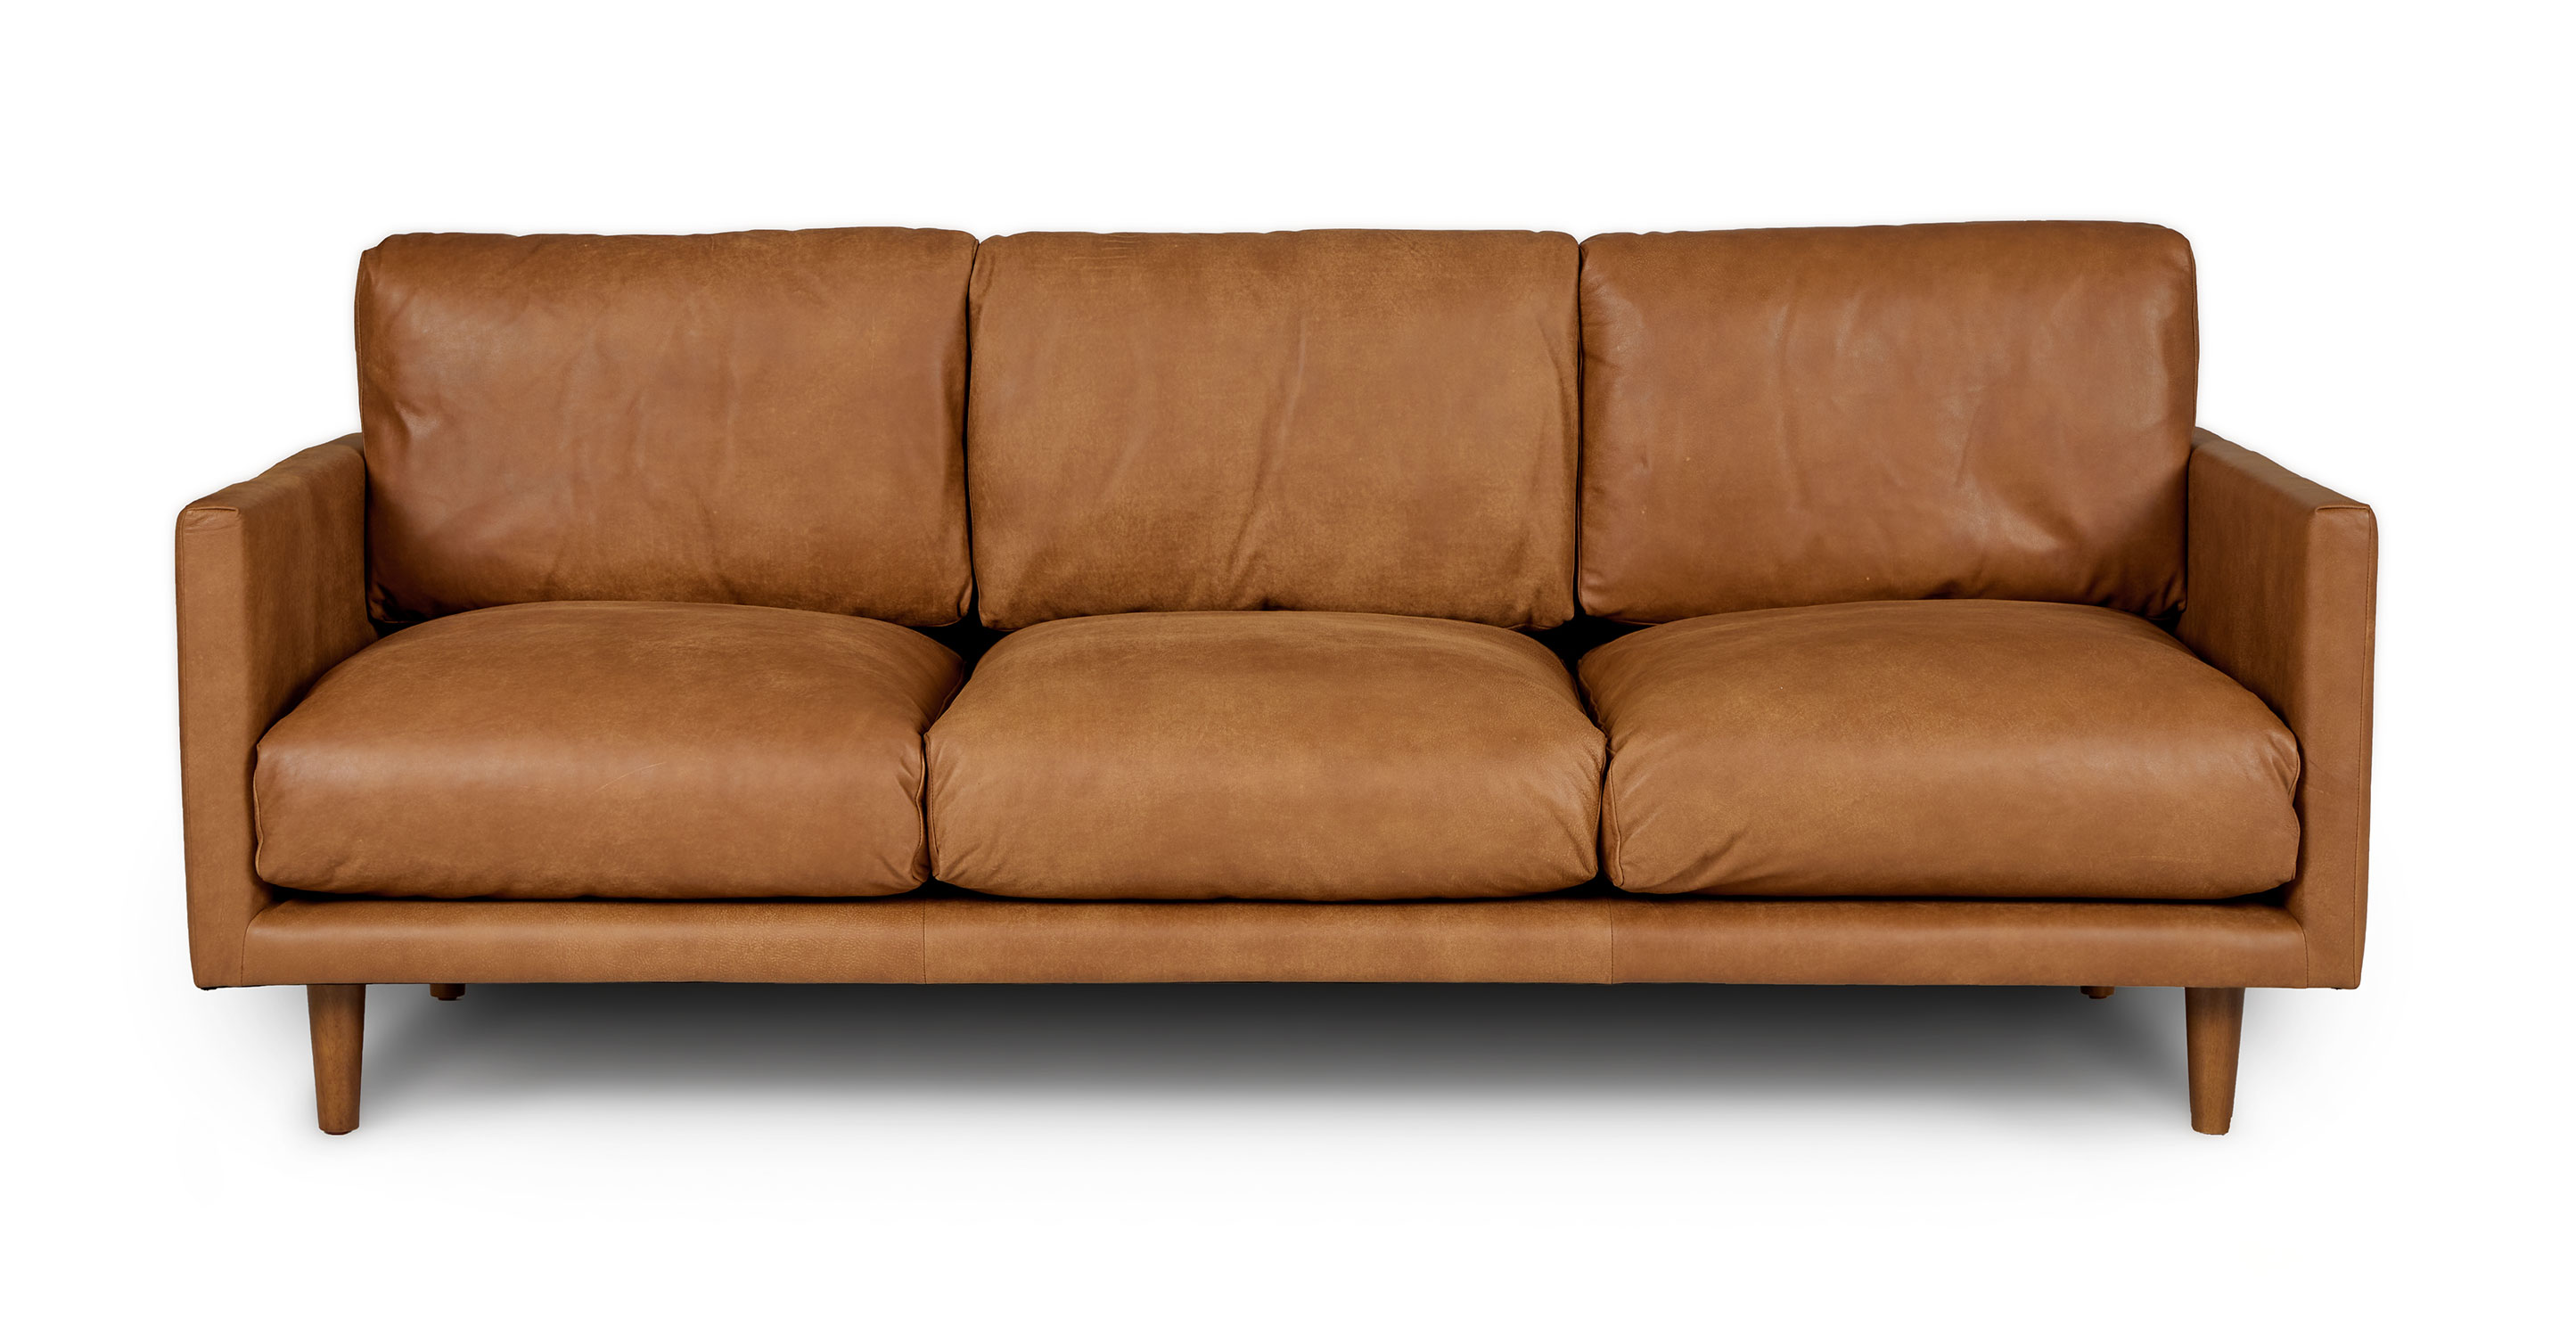 Dakota Tan Nirvana 3 Seater Leather, The Leather Sofa